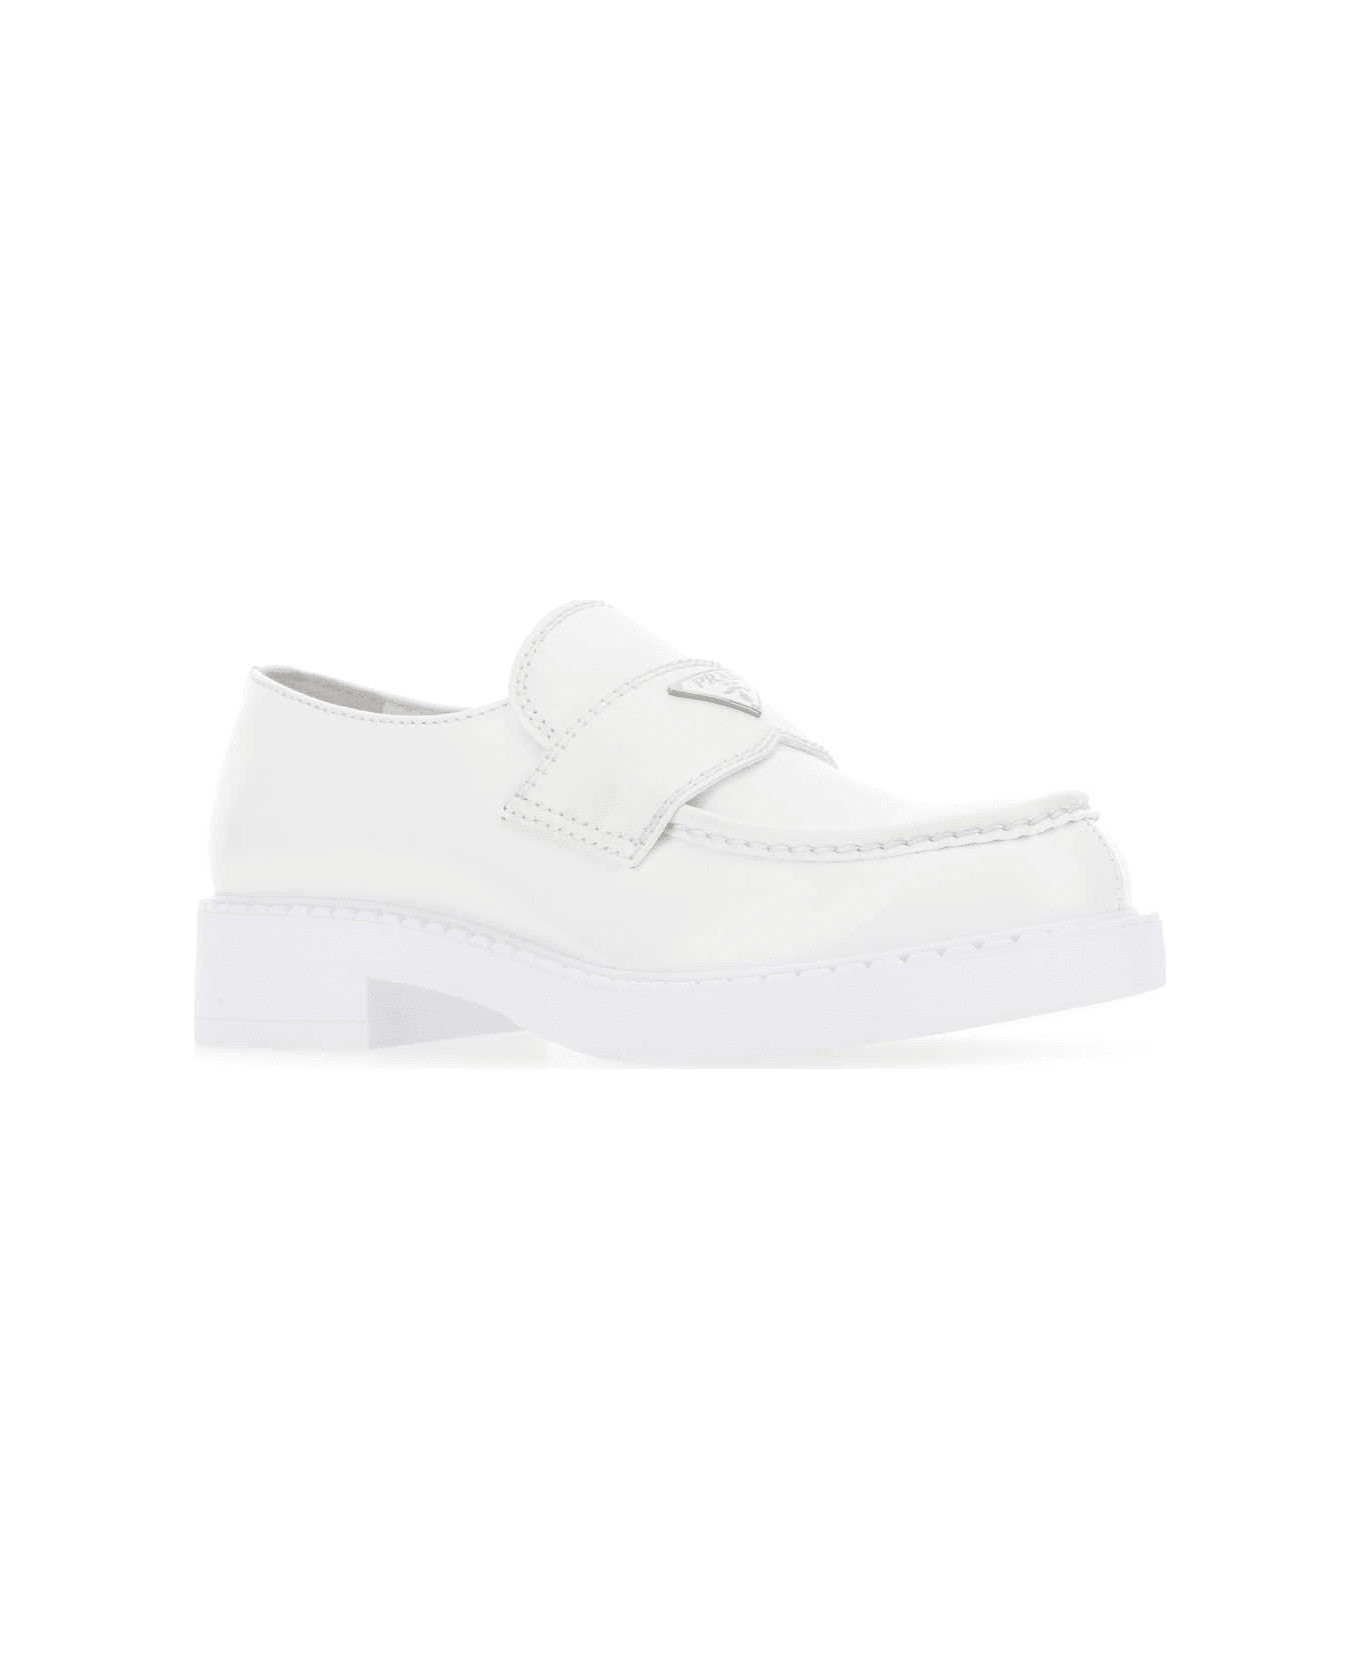 Prada White Leather Loafers - F0009